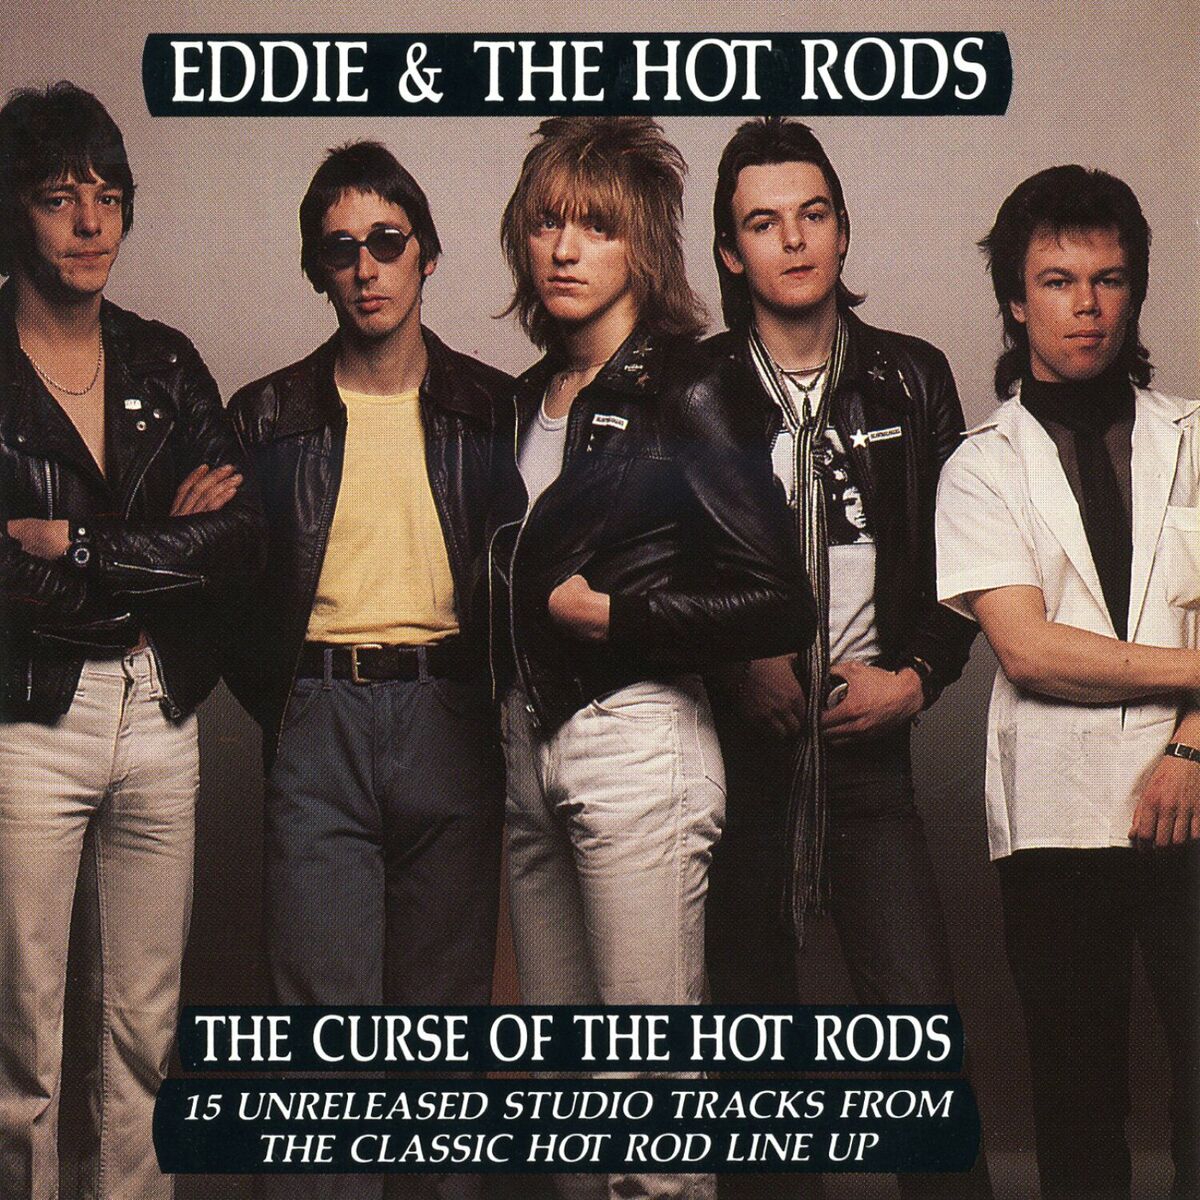 Eddie & The Hot Rods: albums, songs, playlists | Listen on Deezer